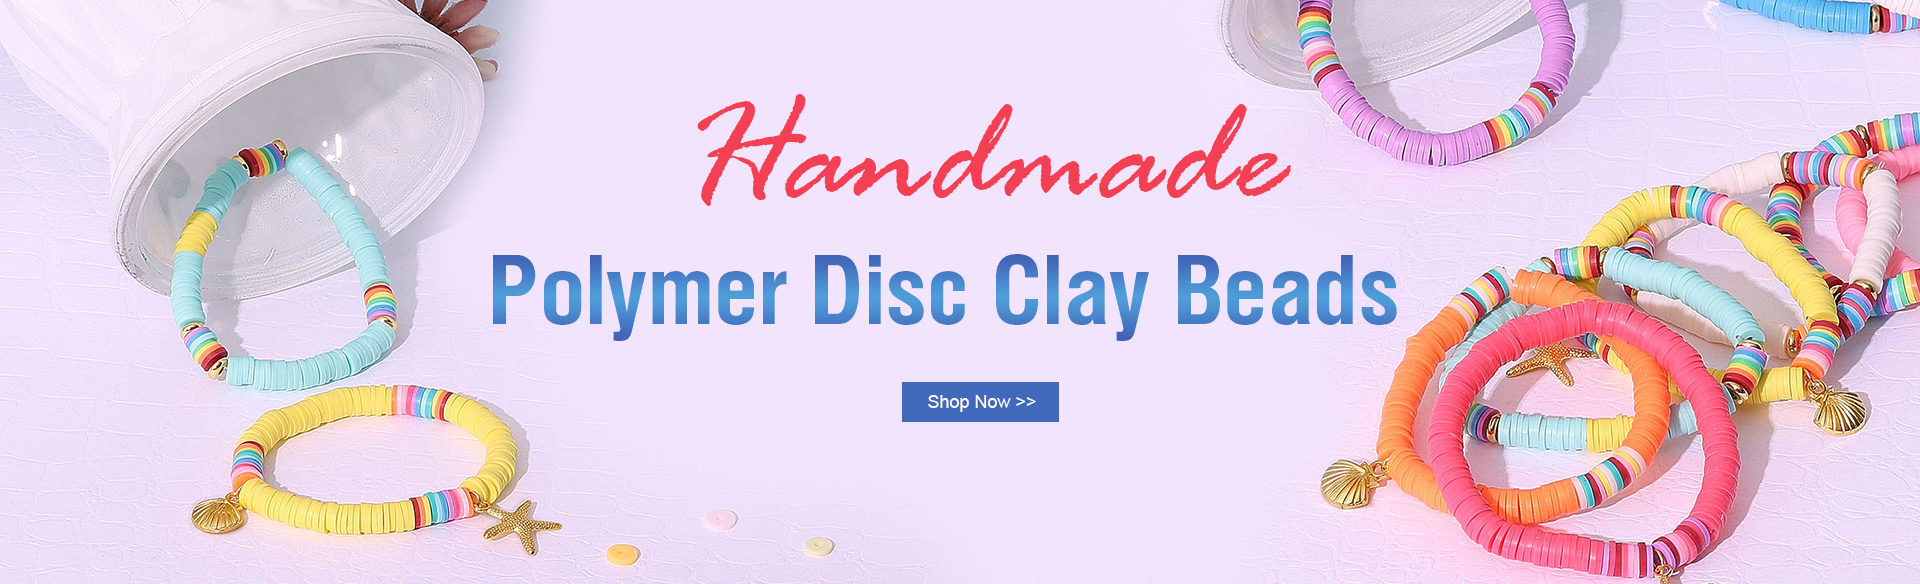 Handmade Polymer Disc Clay Beads